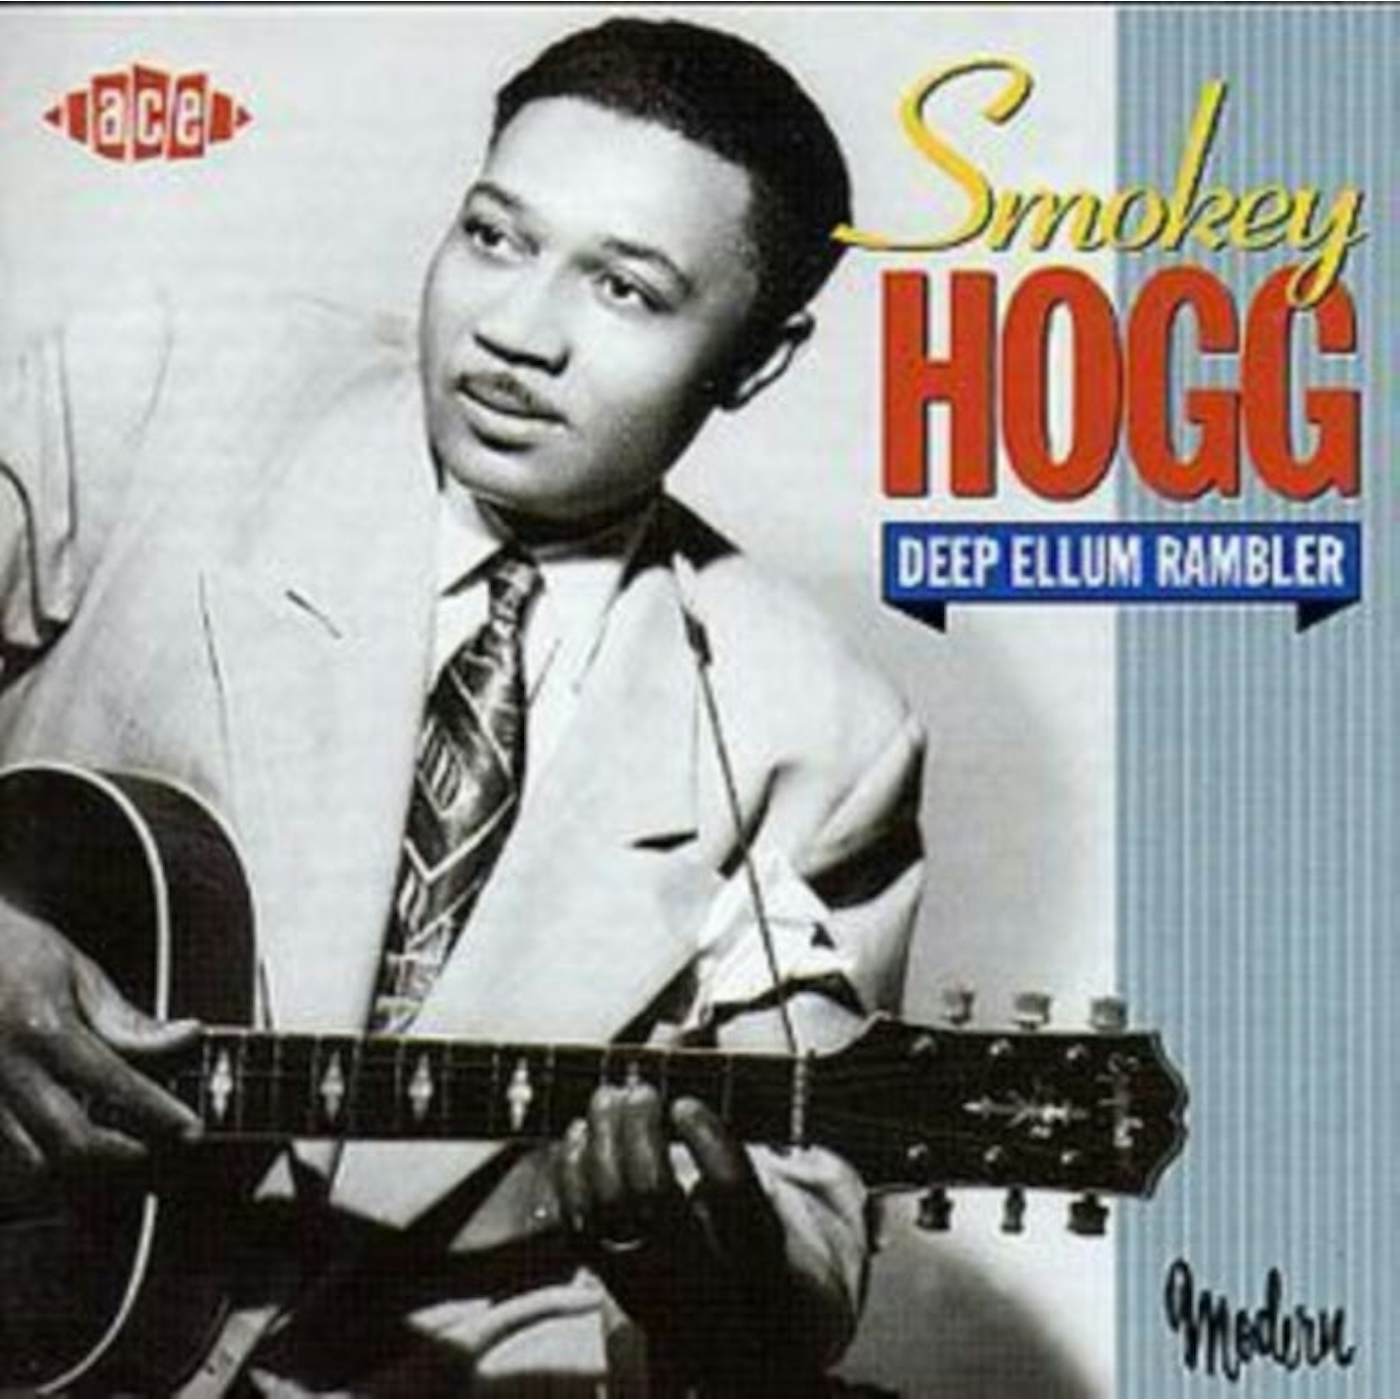 Smokey Hogg CD - Deep Ellum Rambler